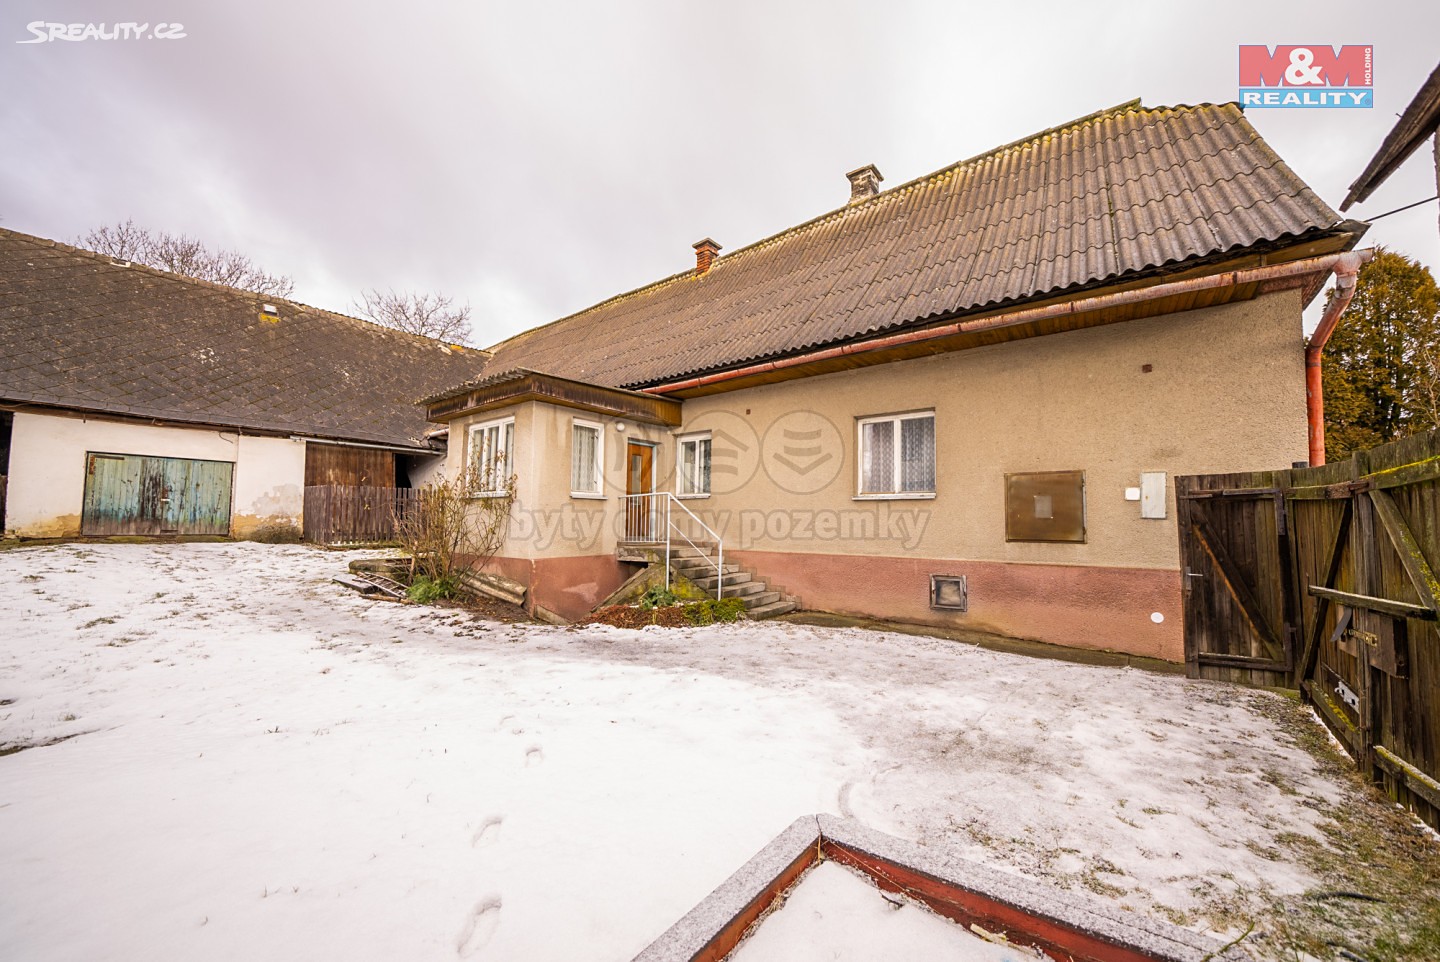 Prodej  rodinného domu 85 m², pozemek 2 597 m², Odry - Kamenka, okres Nový Jičín